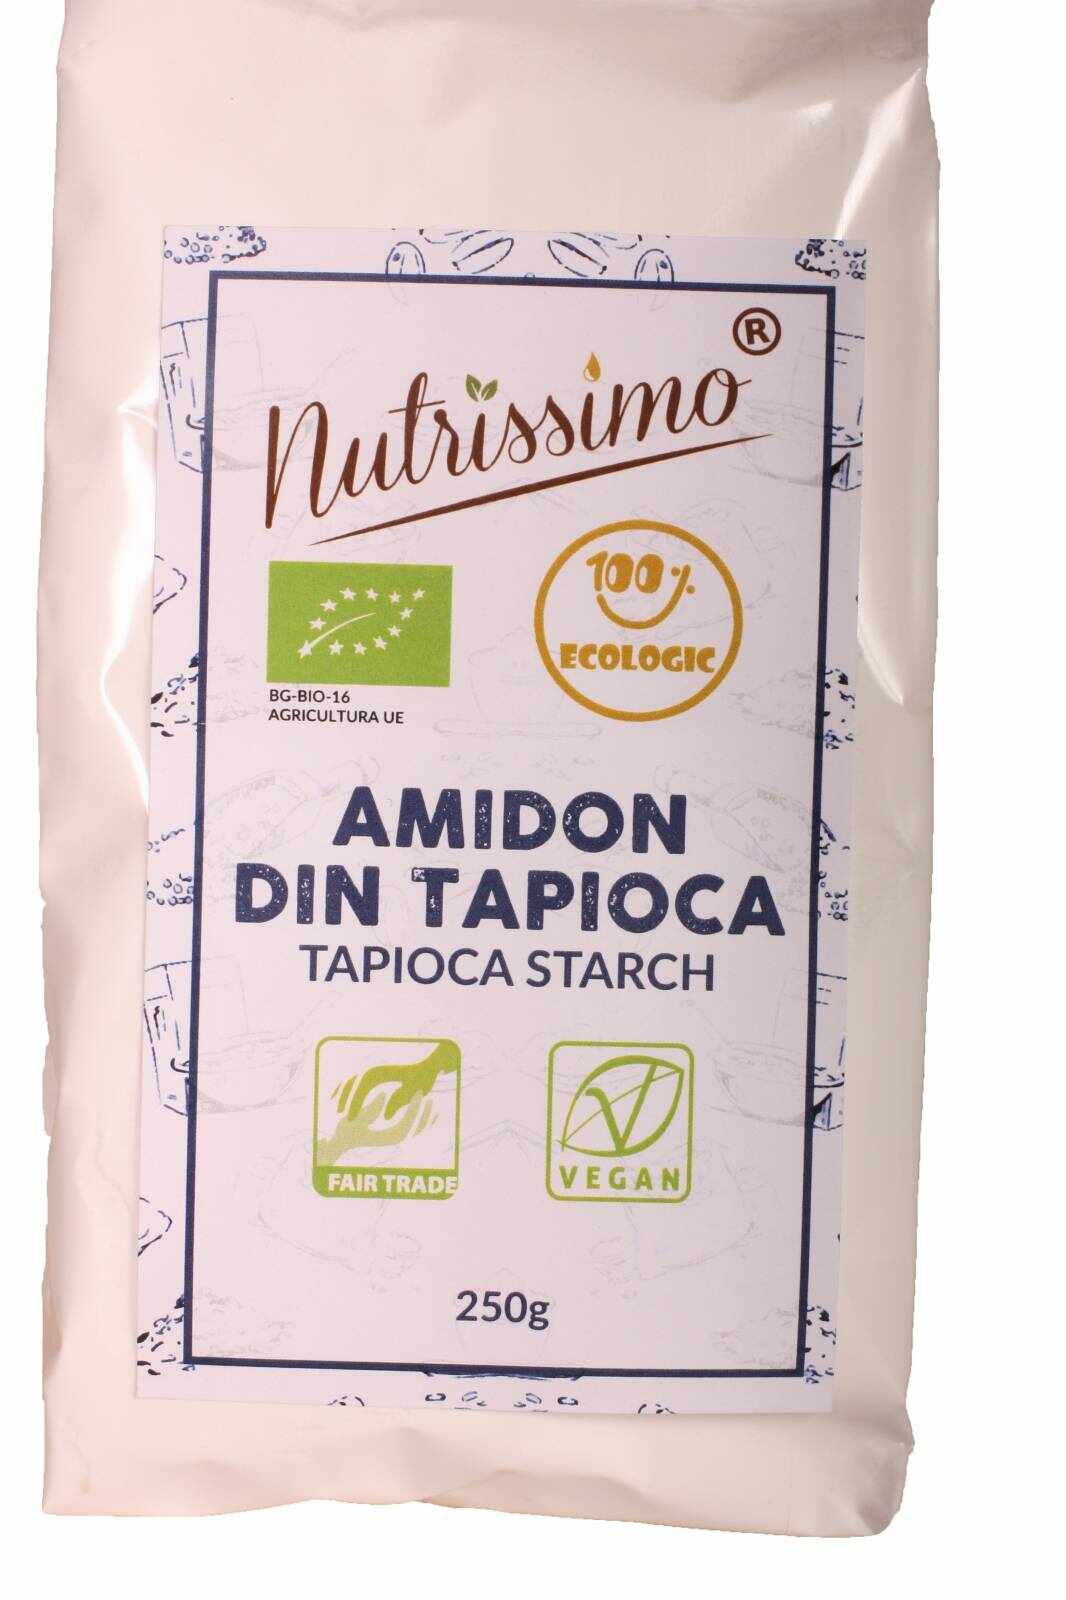 Amidon din tapioca, eco-bio, 250g - Nutrissimo